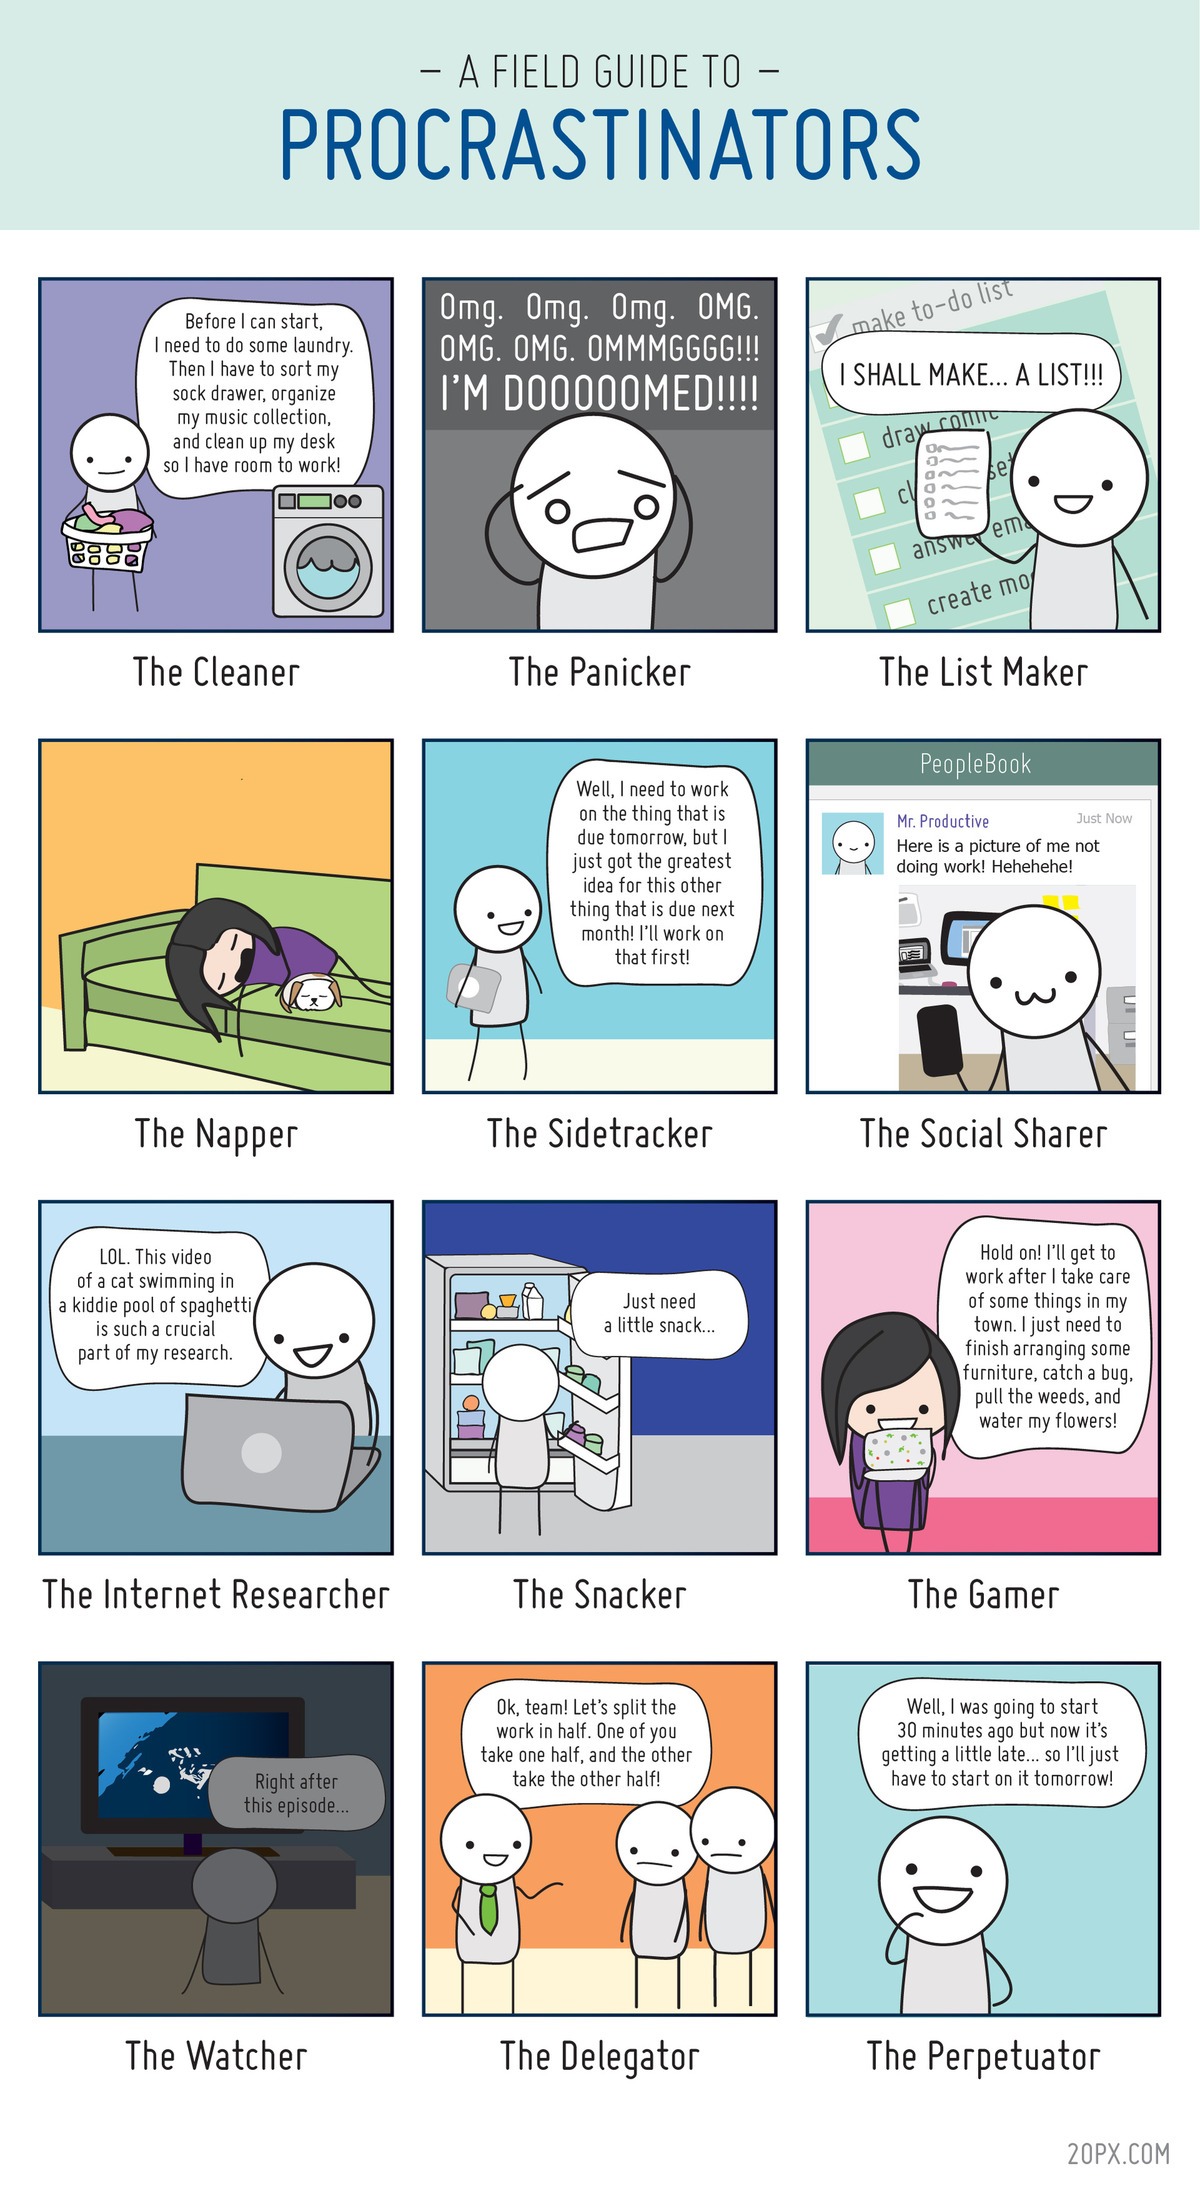 researches about procrastination